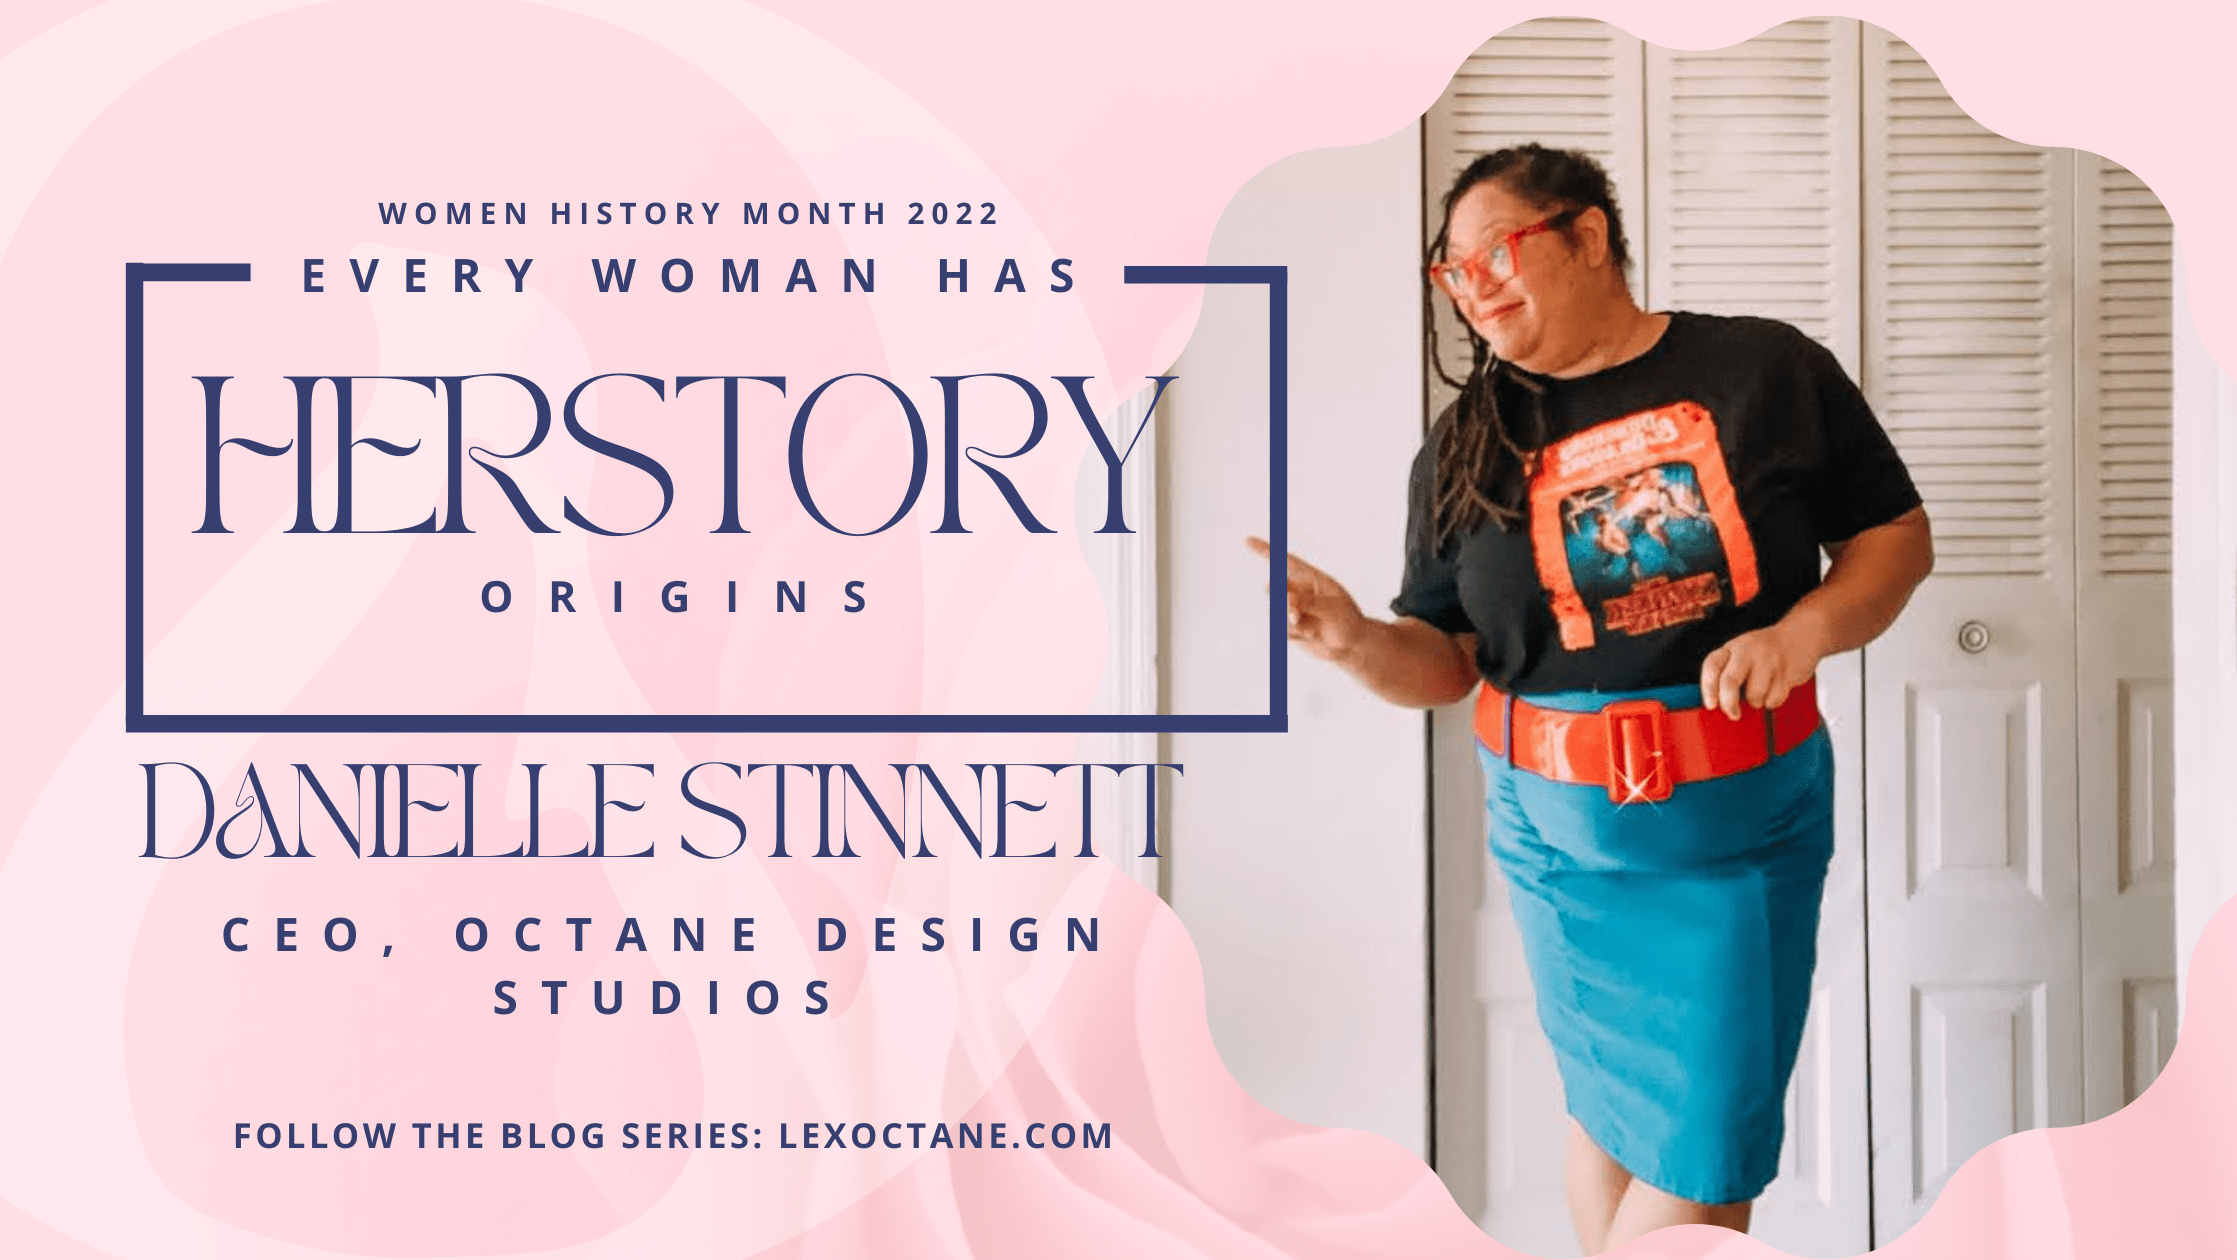 Octane celebrates HERstory Origins with Danielle Meadows-Stinnett